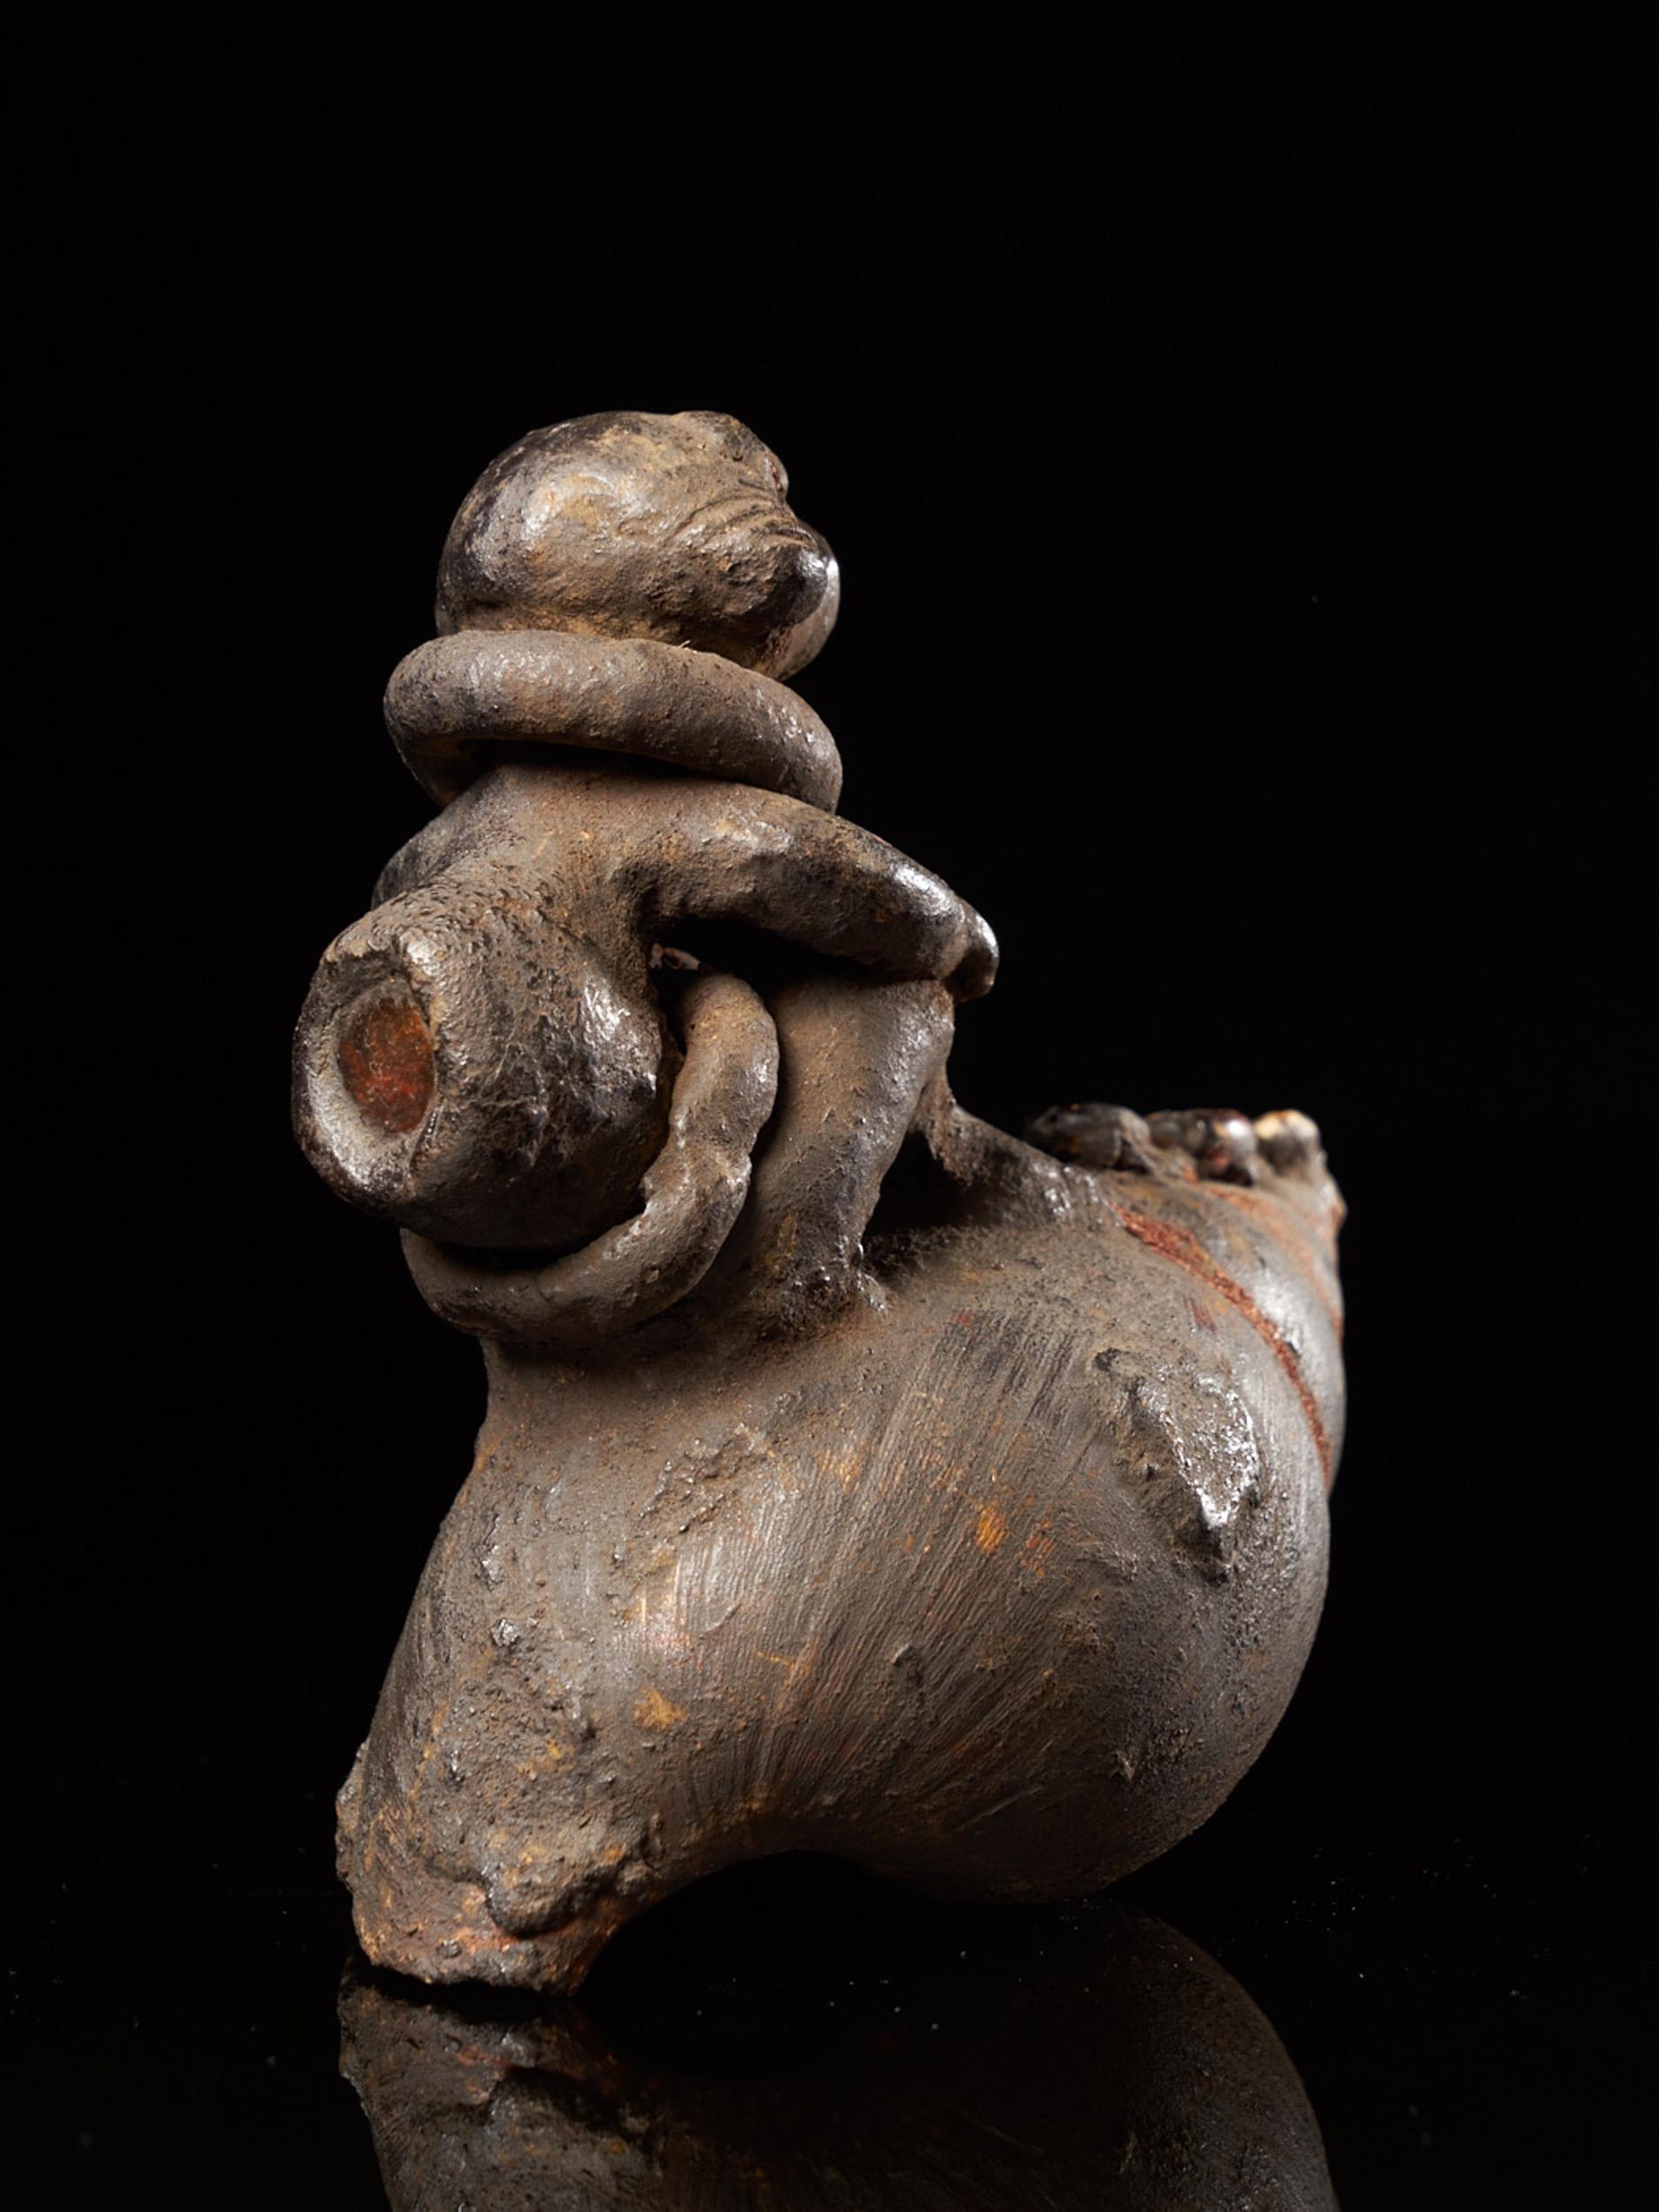 Terracotta Ceremonial Monkey Figure on a Snailshell, Old German Collection, Bulu People